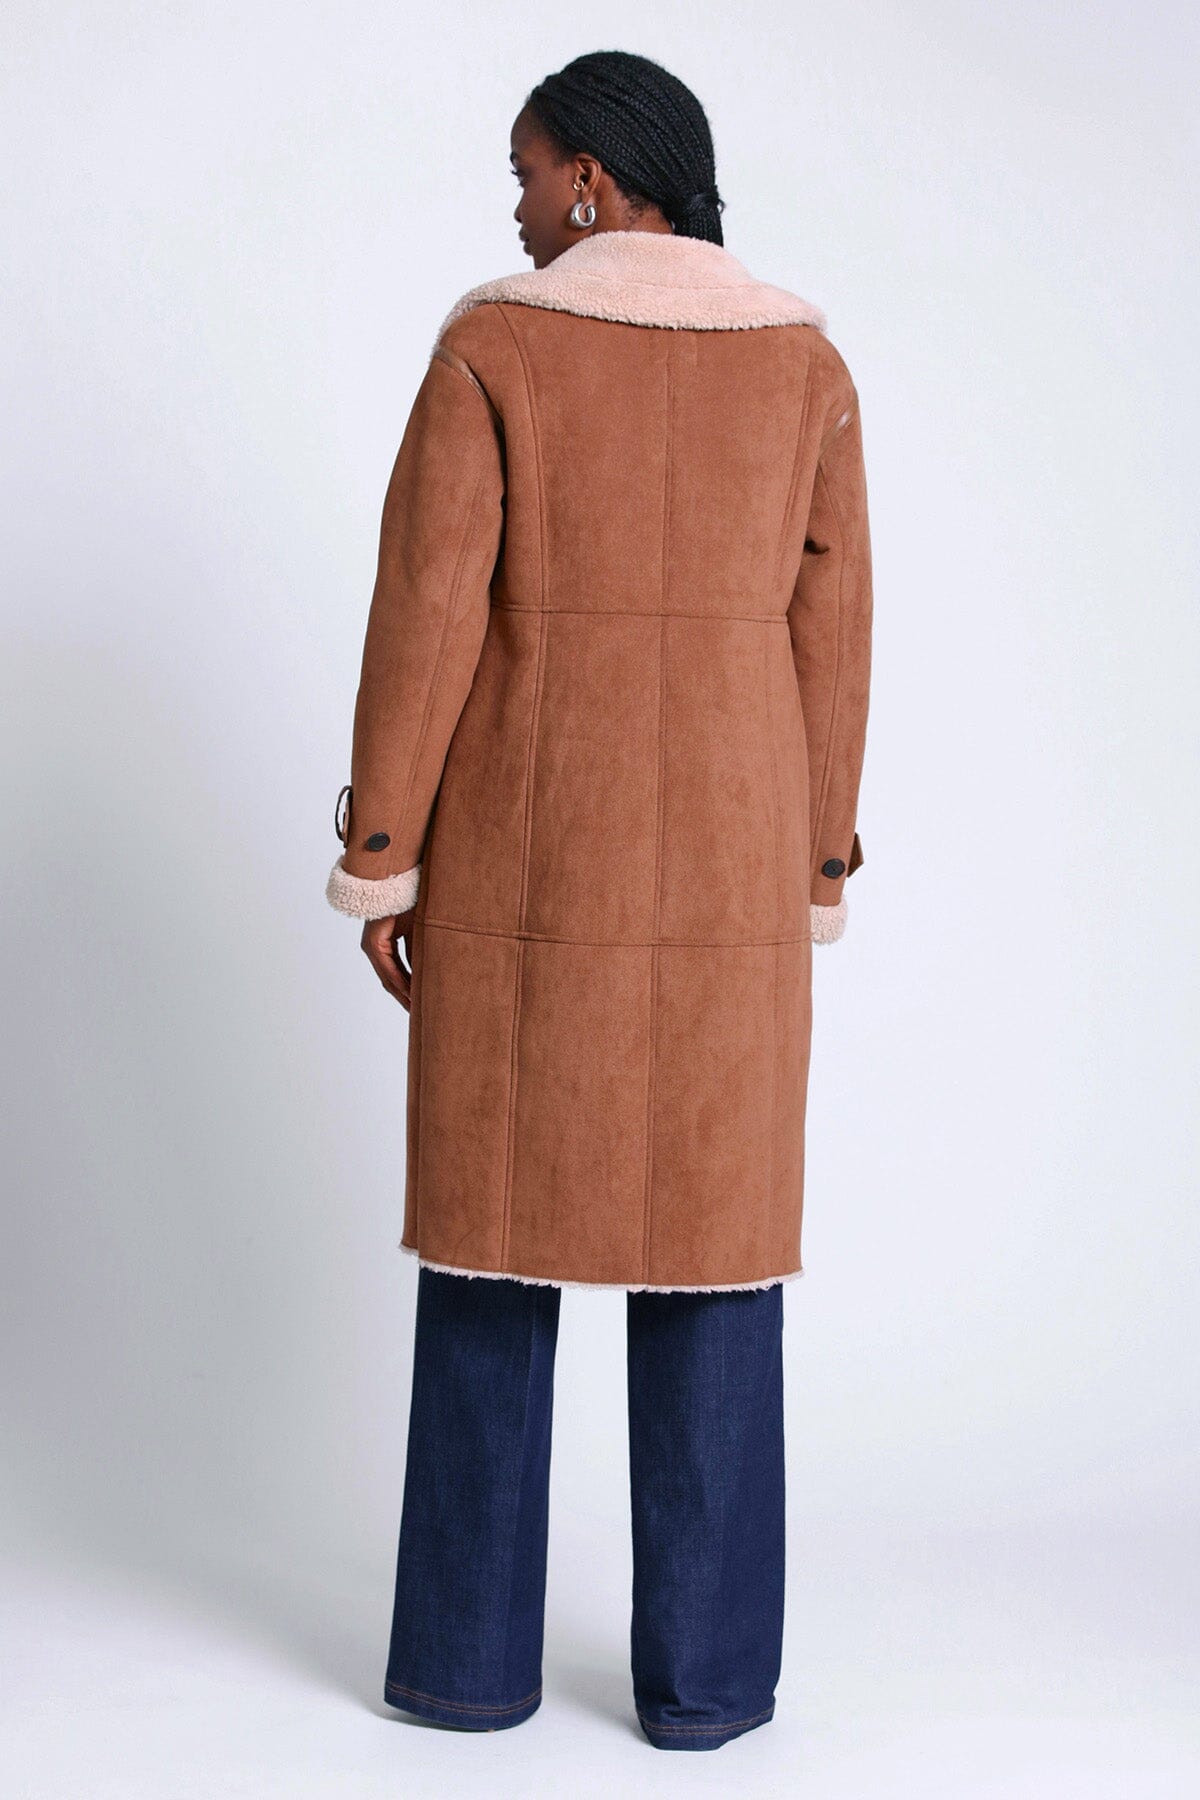 double breasted faux shearling coat outerwear fawn brown - women's figure flattering designer fashion long warm coats for women